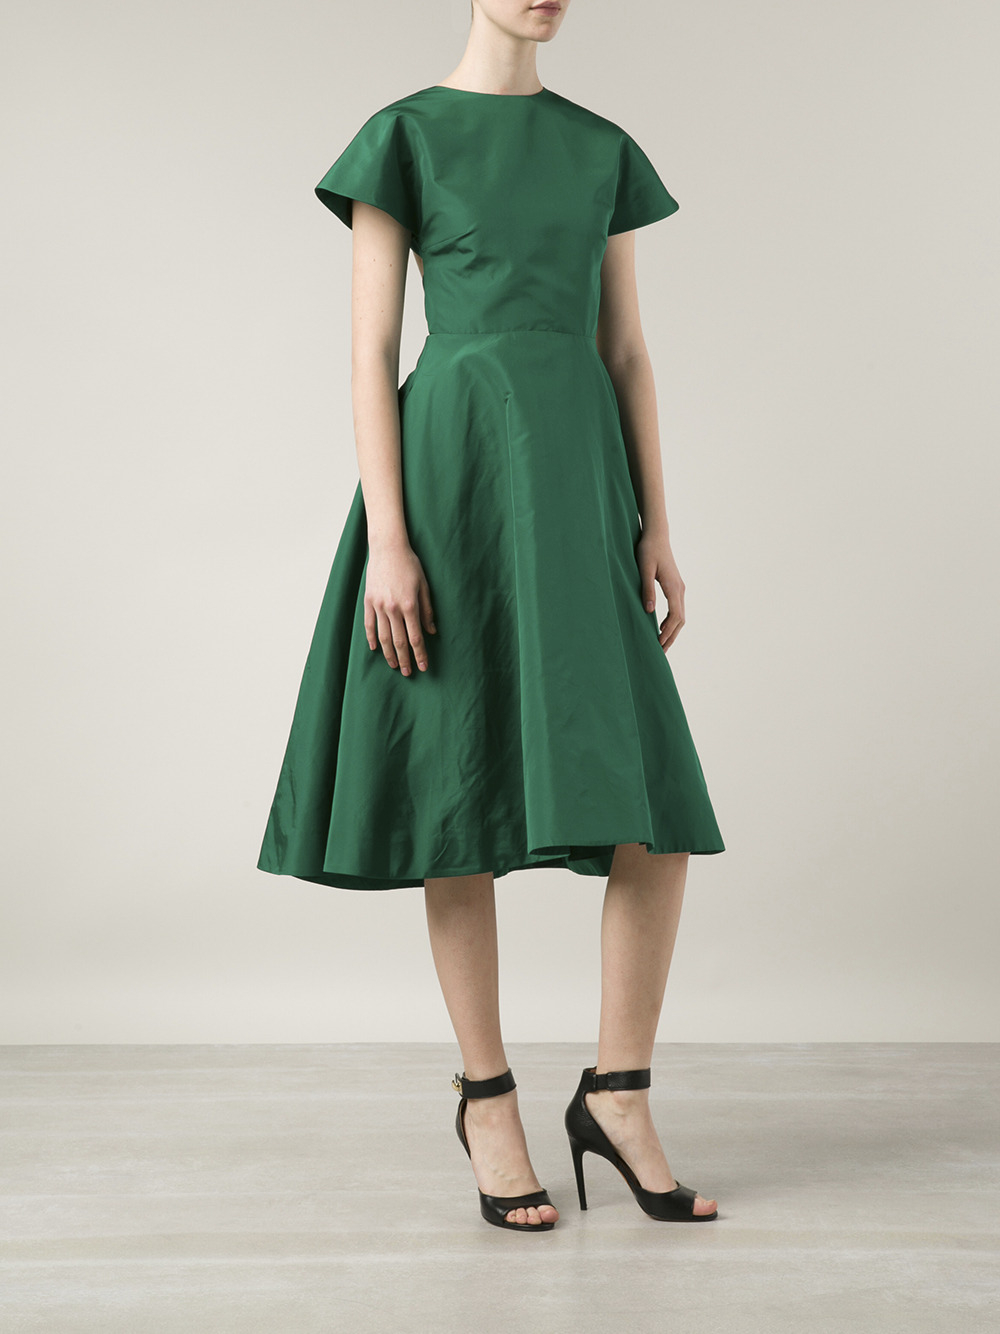 Rosie assoulin Buttercup Dress in Green | Lyst